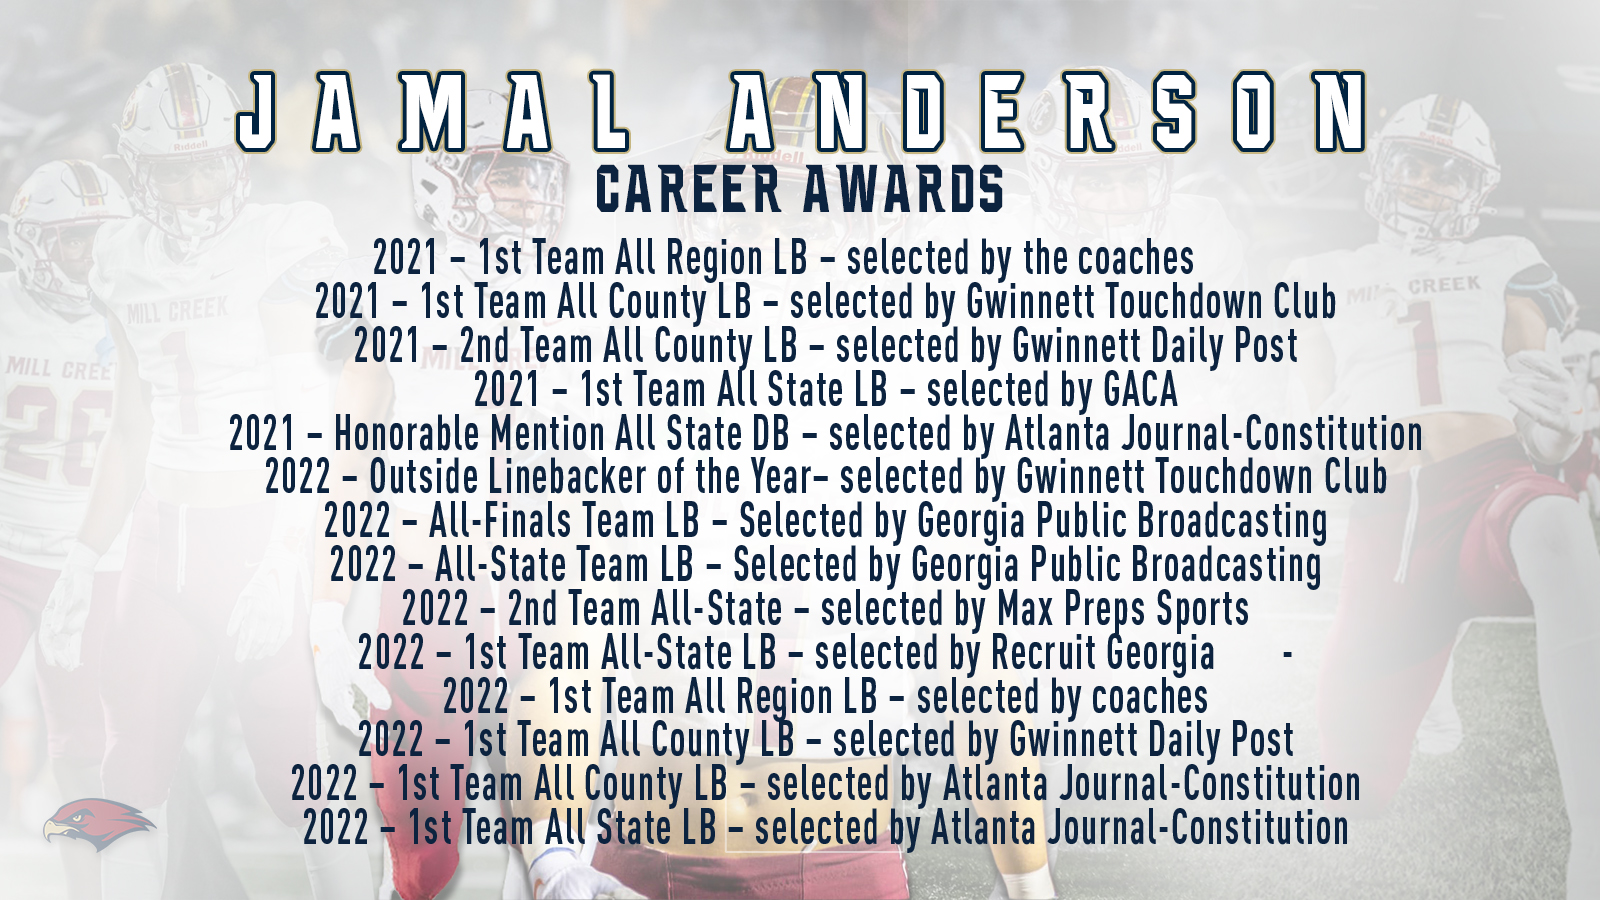 Jamal Anderson, Clemson, Linebacker